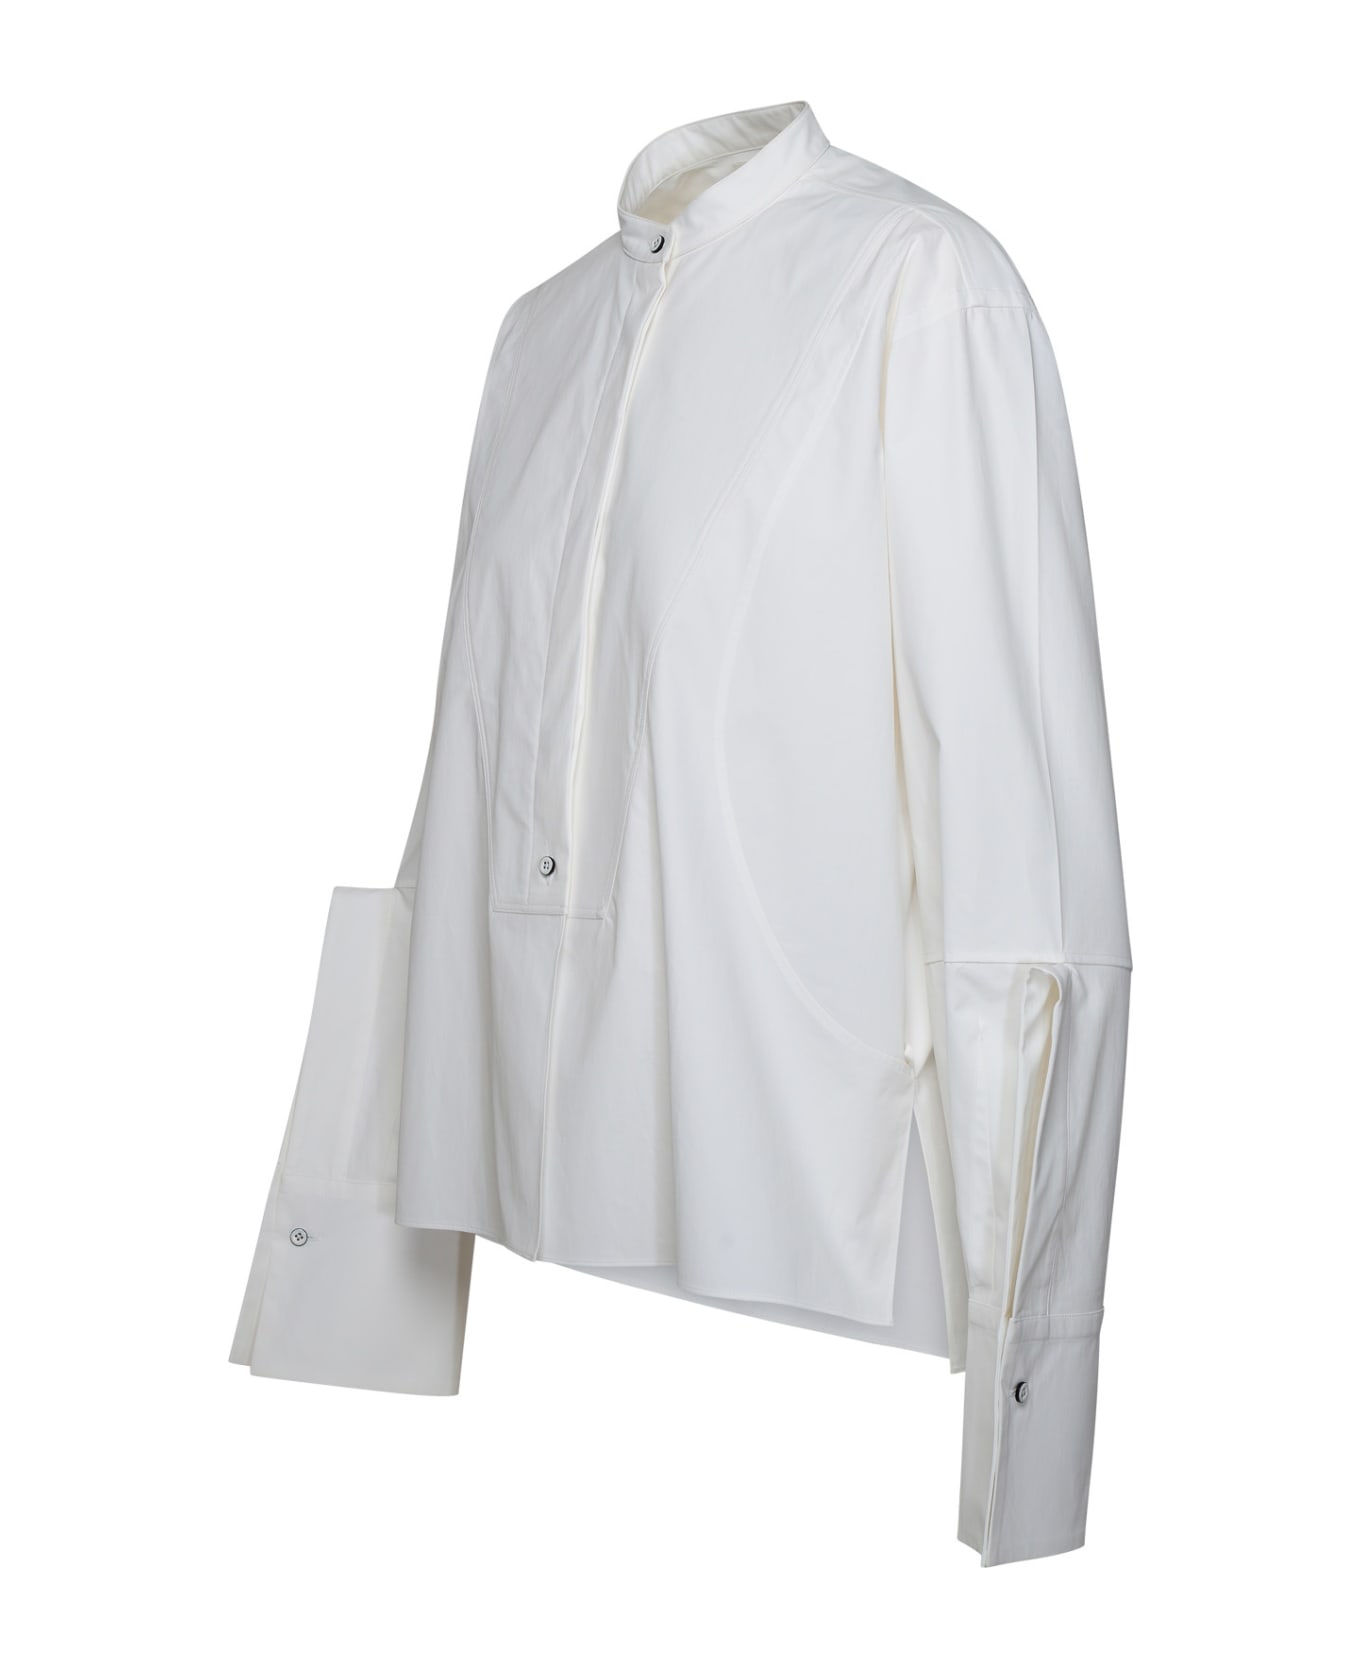 Jil Sander White Cotton Shirt - White トップス